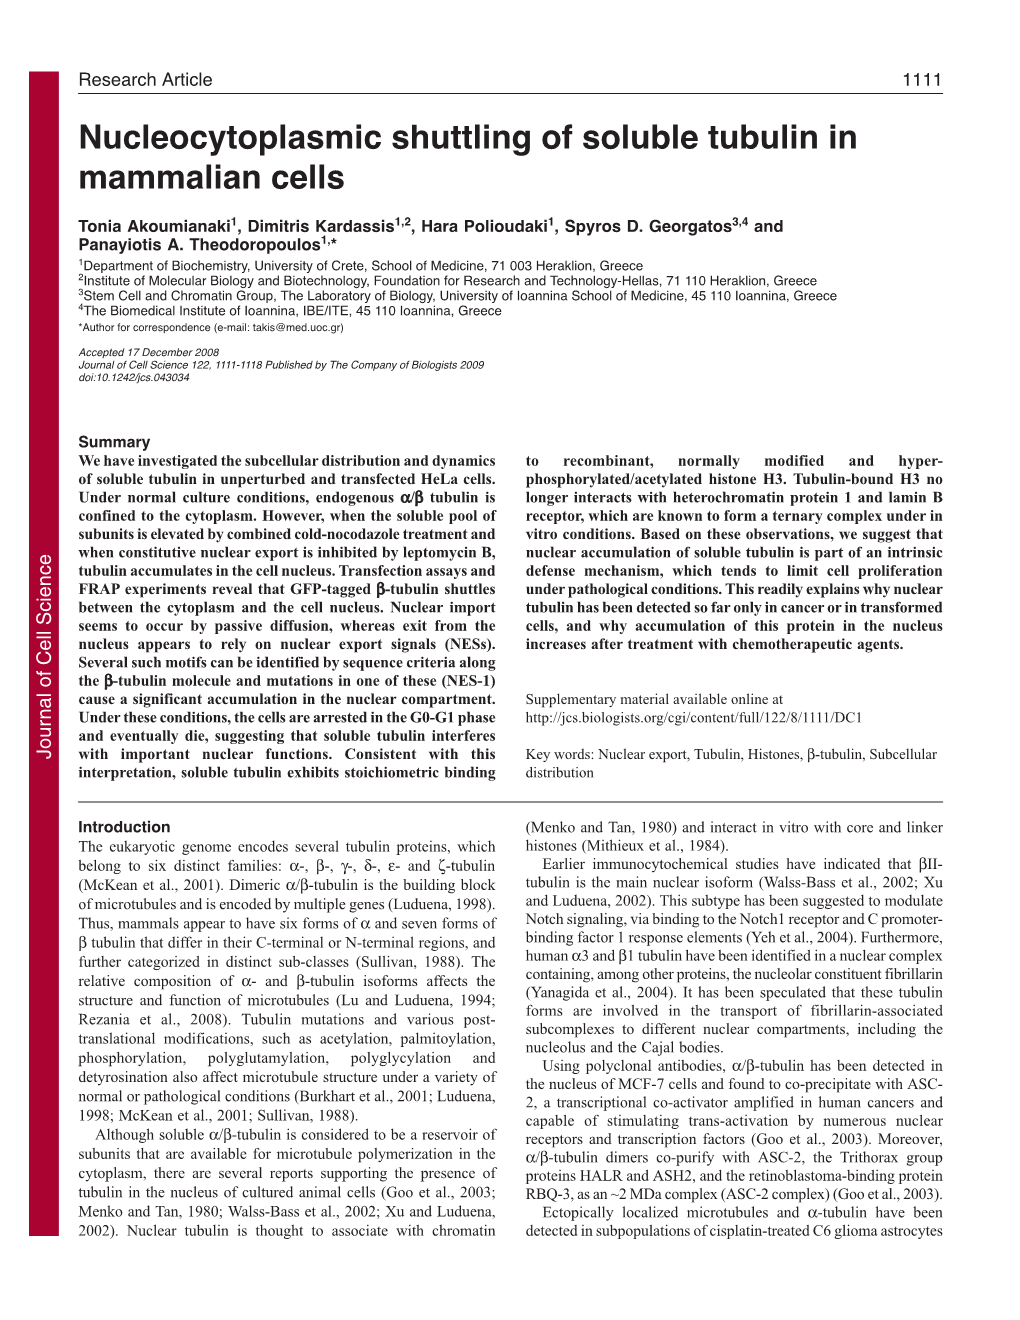 Nucleocytoplasmic Shuttling of Soluble Tubulin in Mammalian Cells